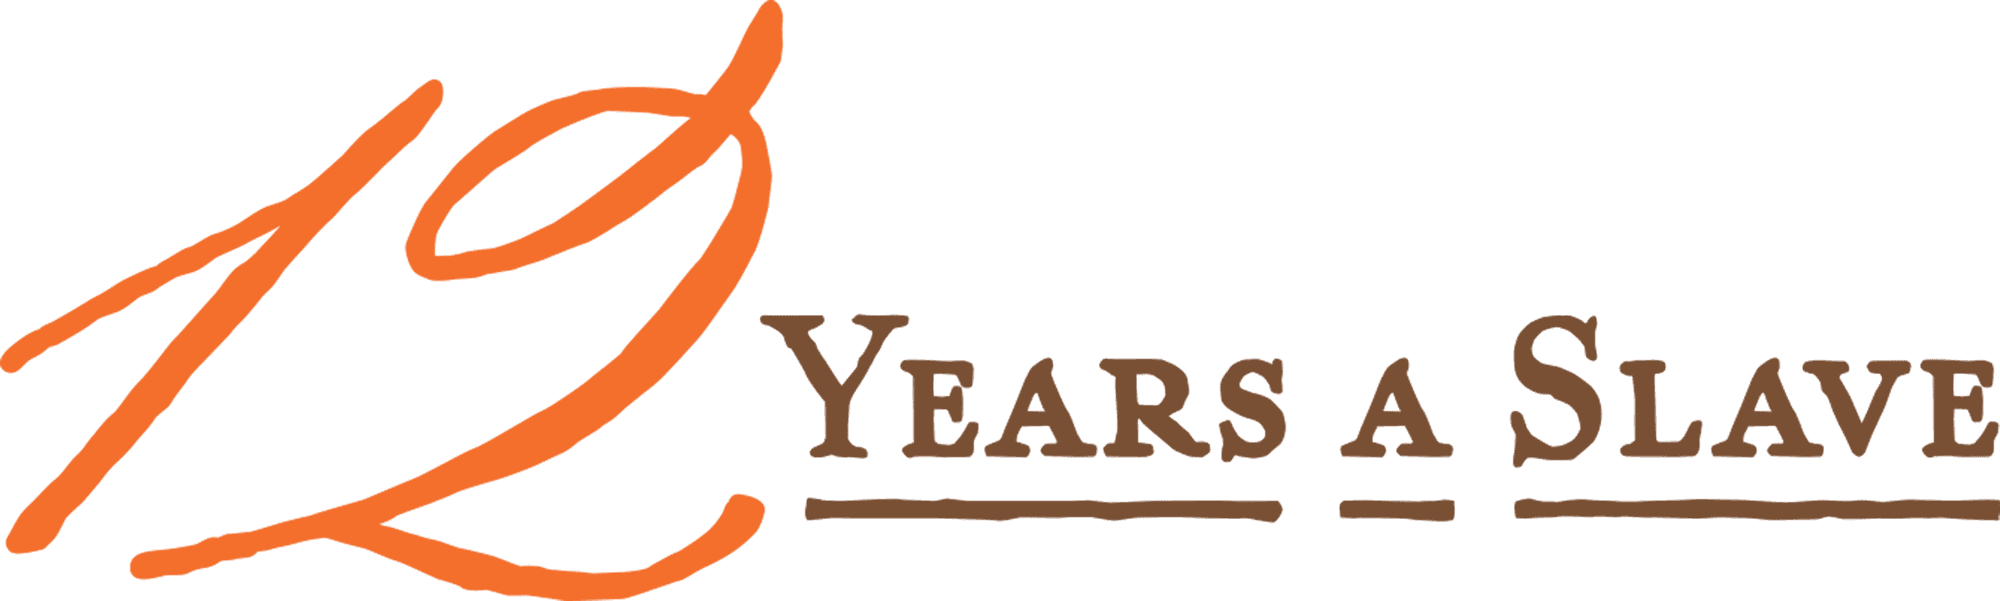 12 Years a Slave logo